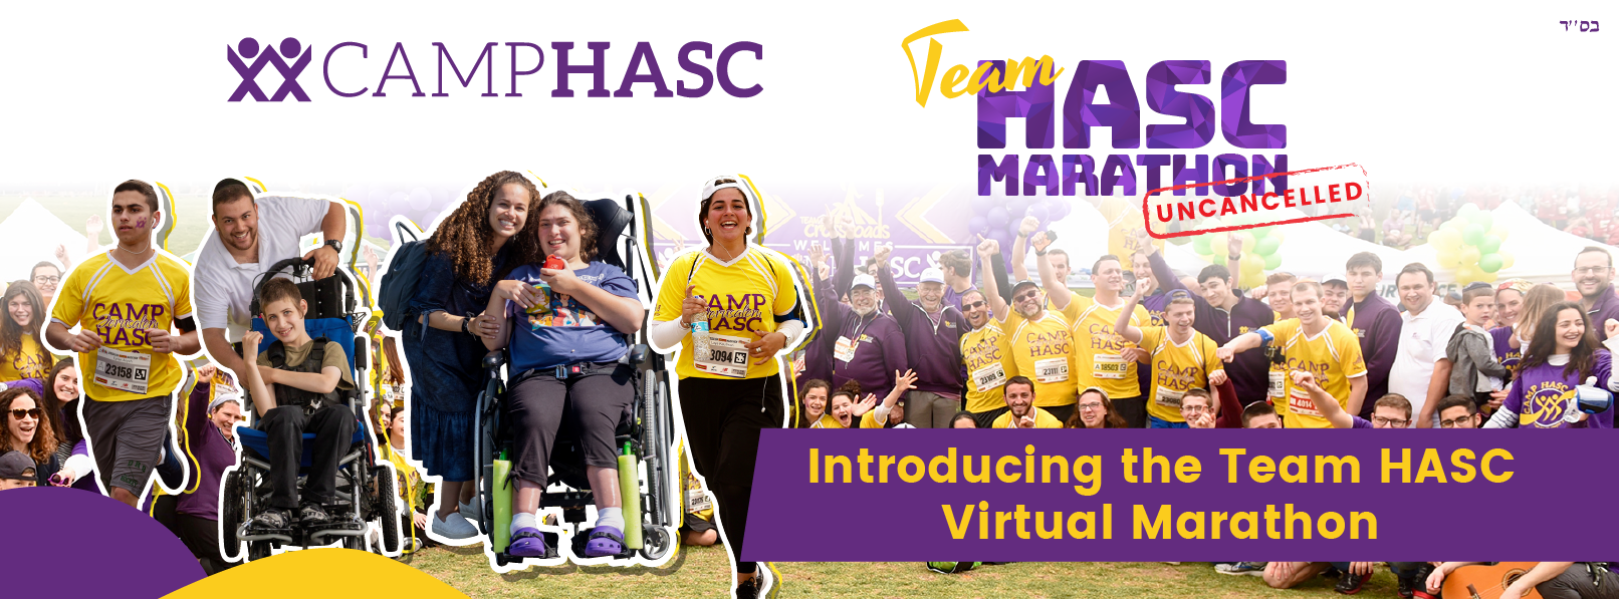 Team HASC Virtual Marathon, Thanksgiving 2020